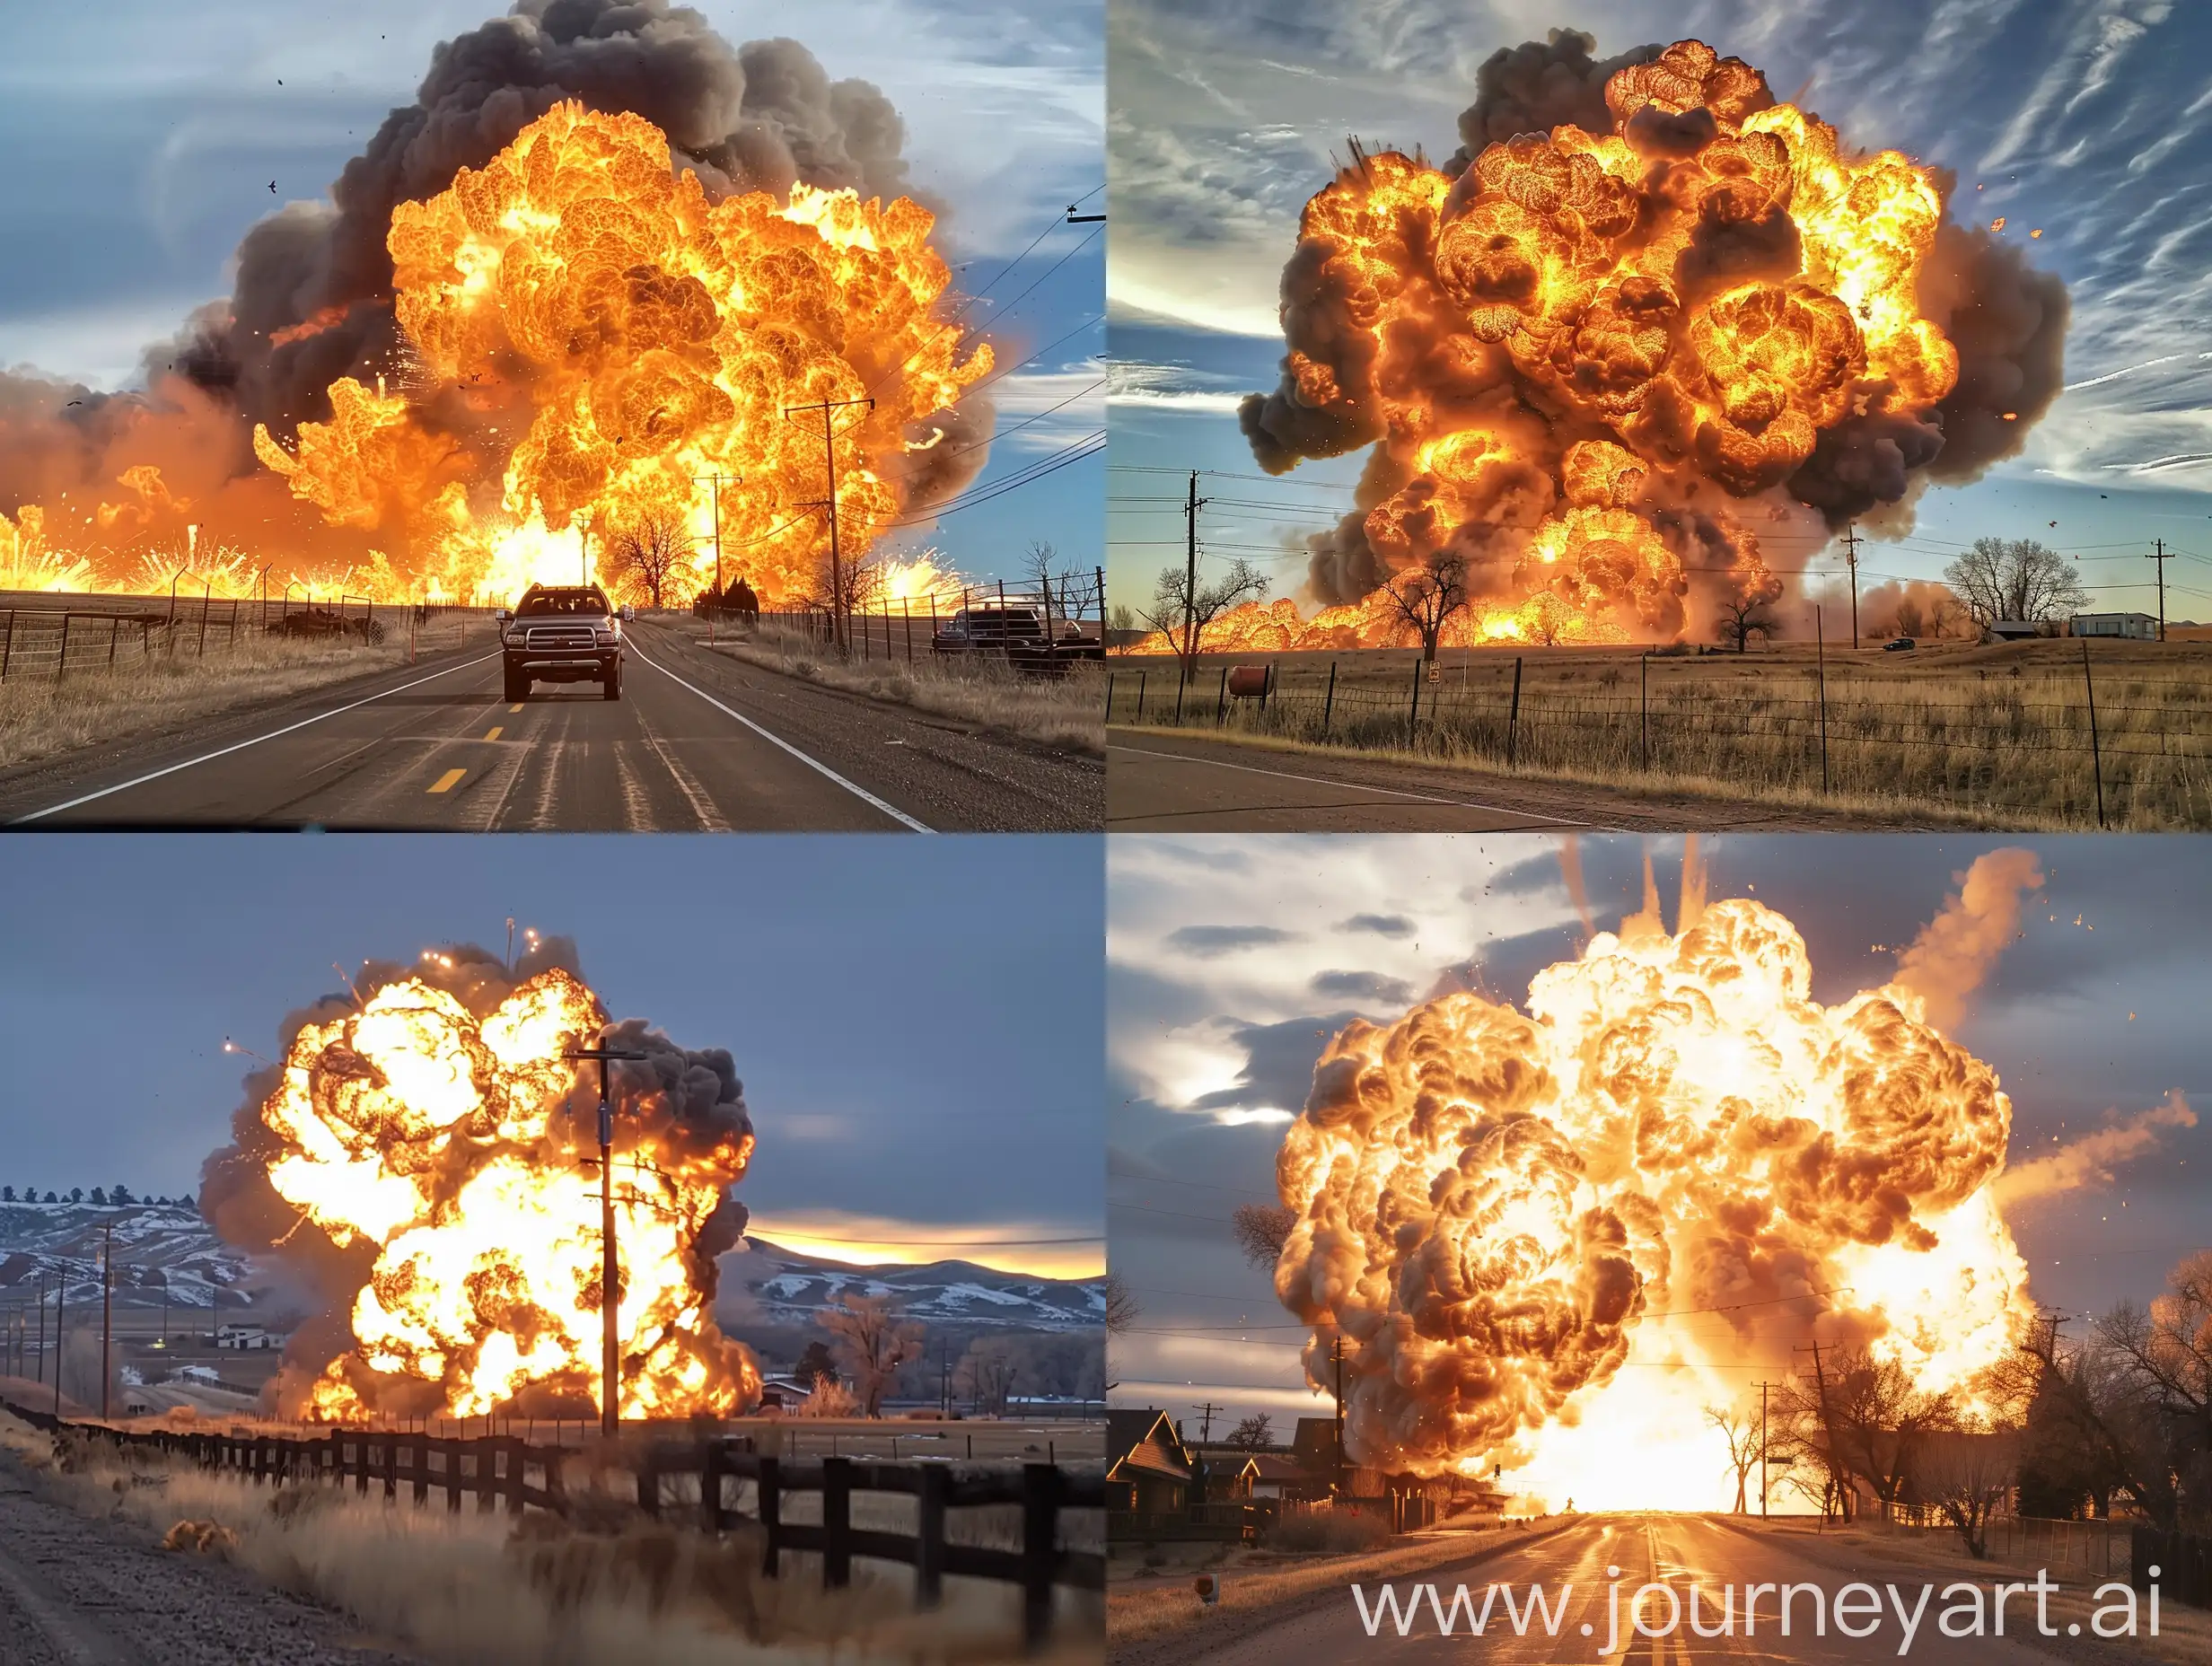 Massive-Explosion-Captured-in-Colorado-Landscape-Photograph